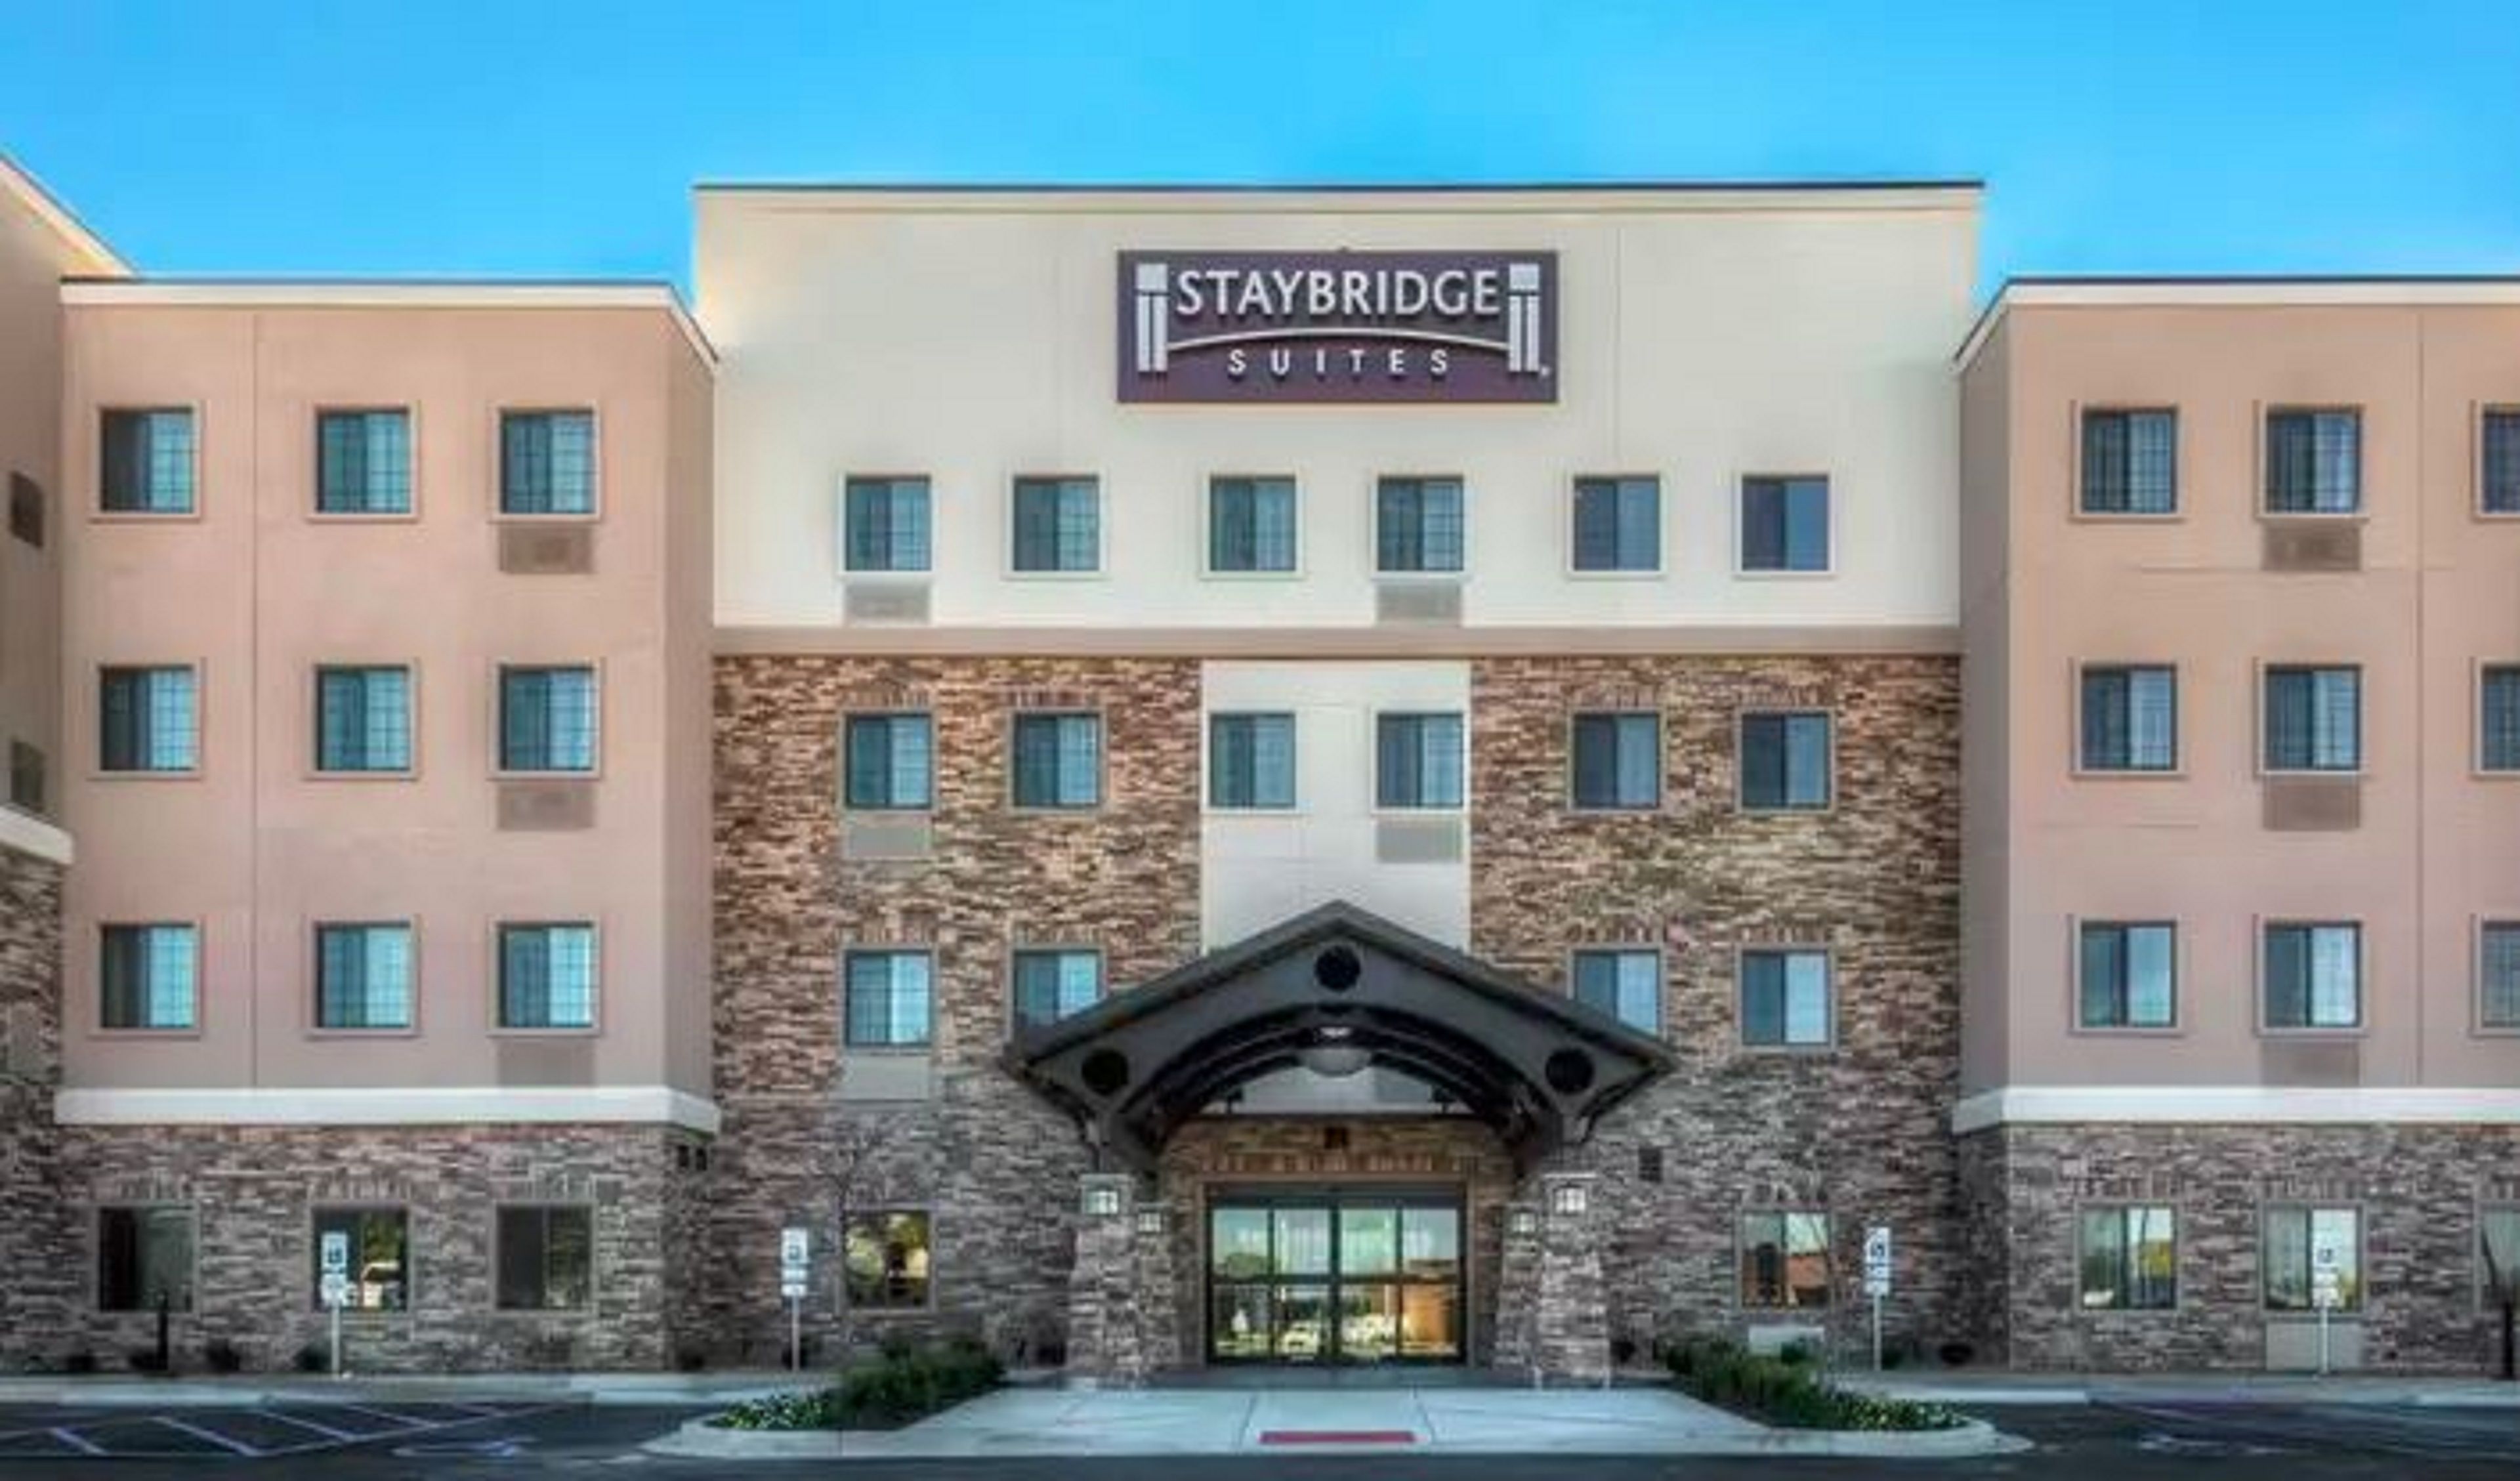 staybridge-suites-charlottesville-5697536362-original.jpg